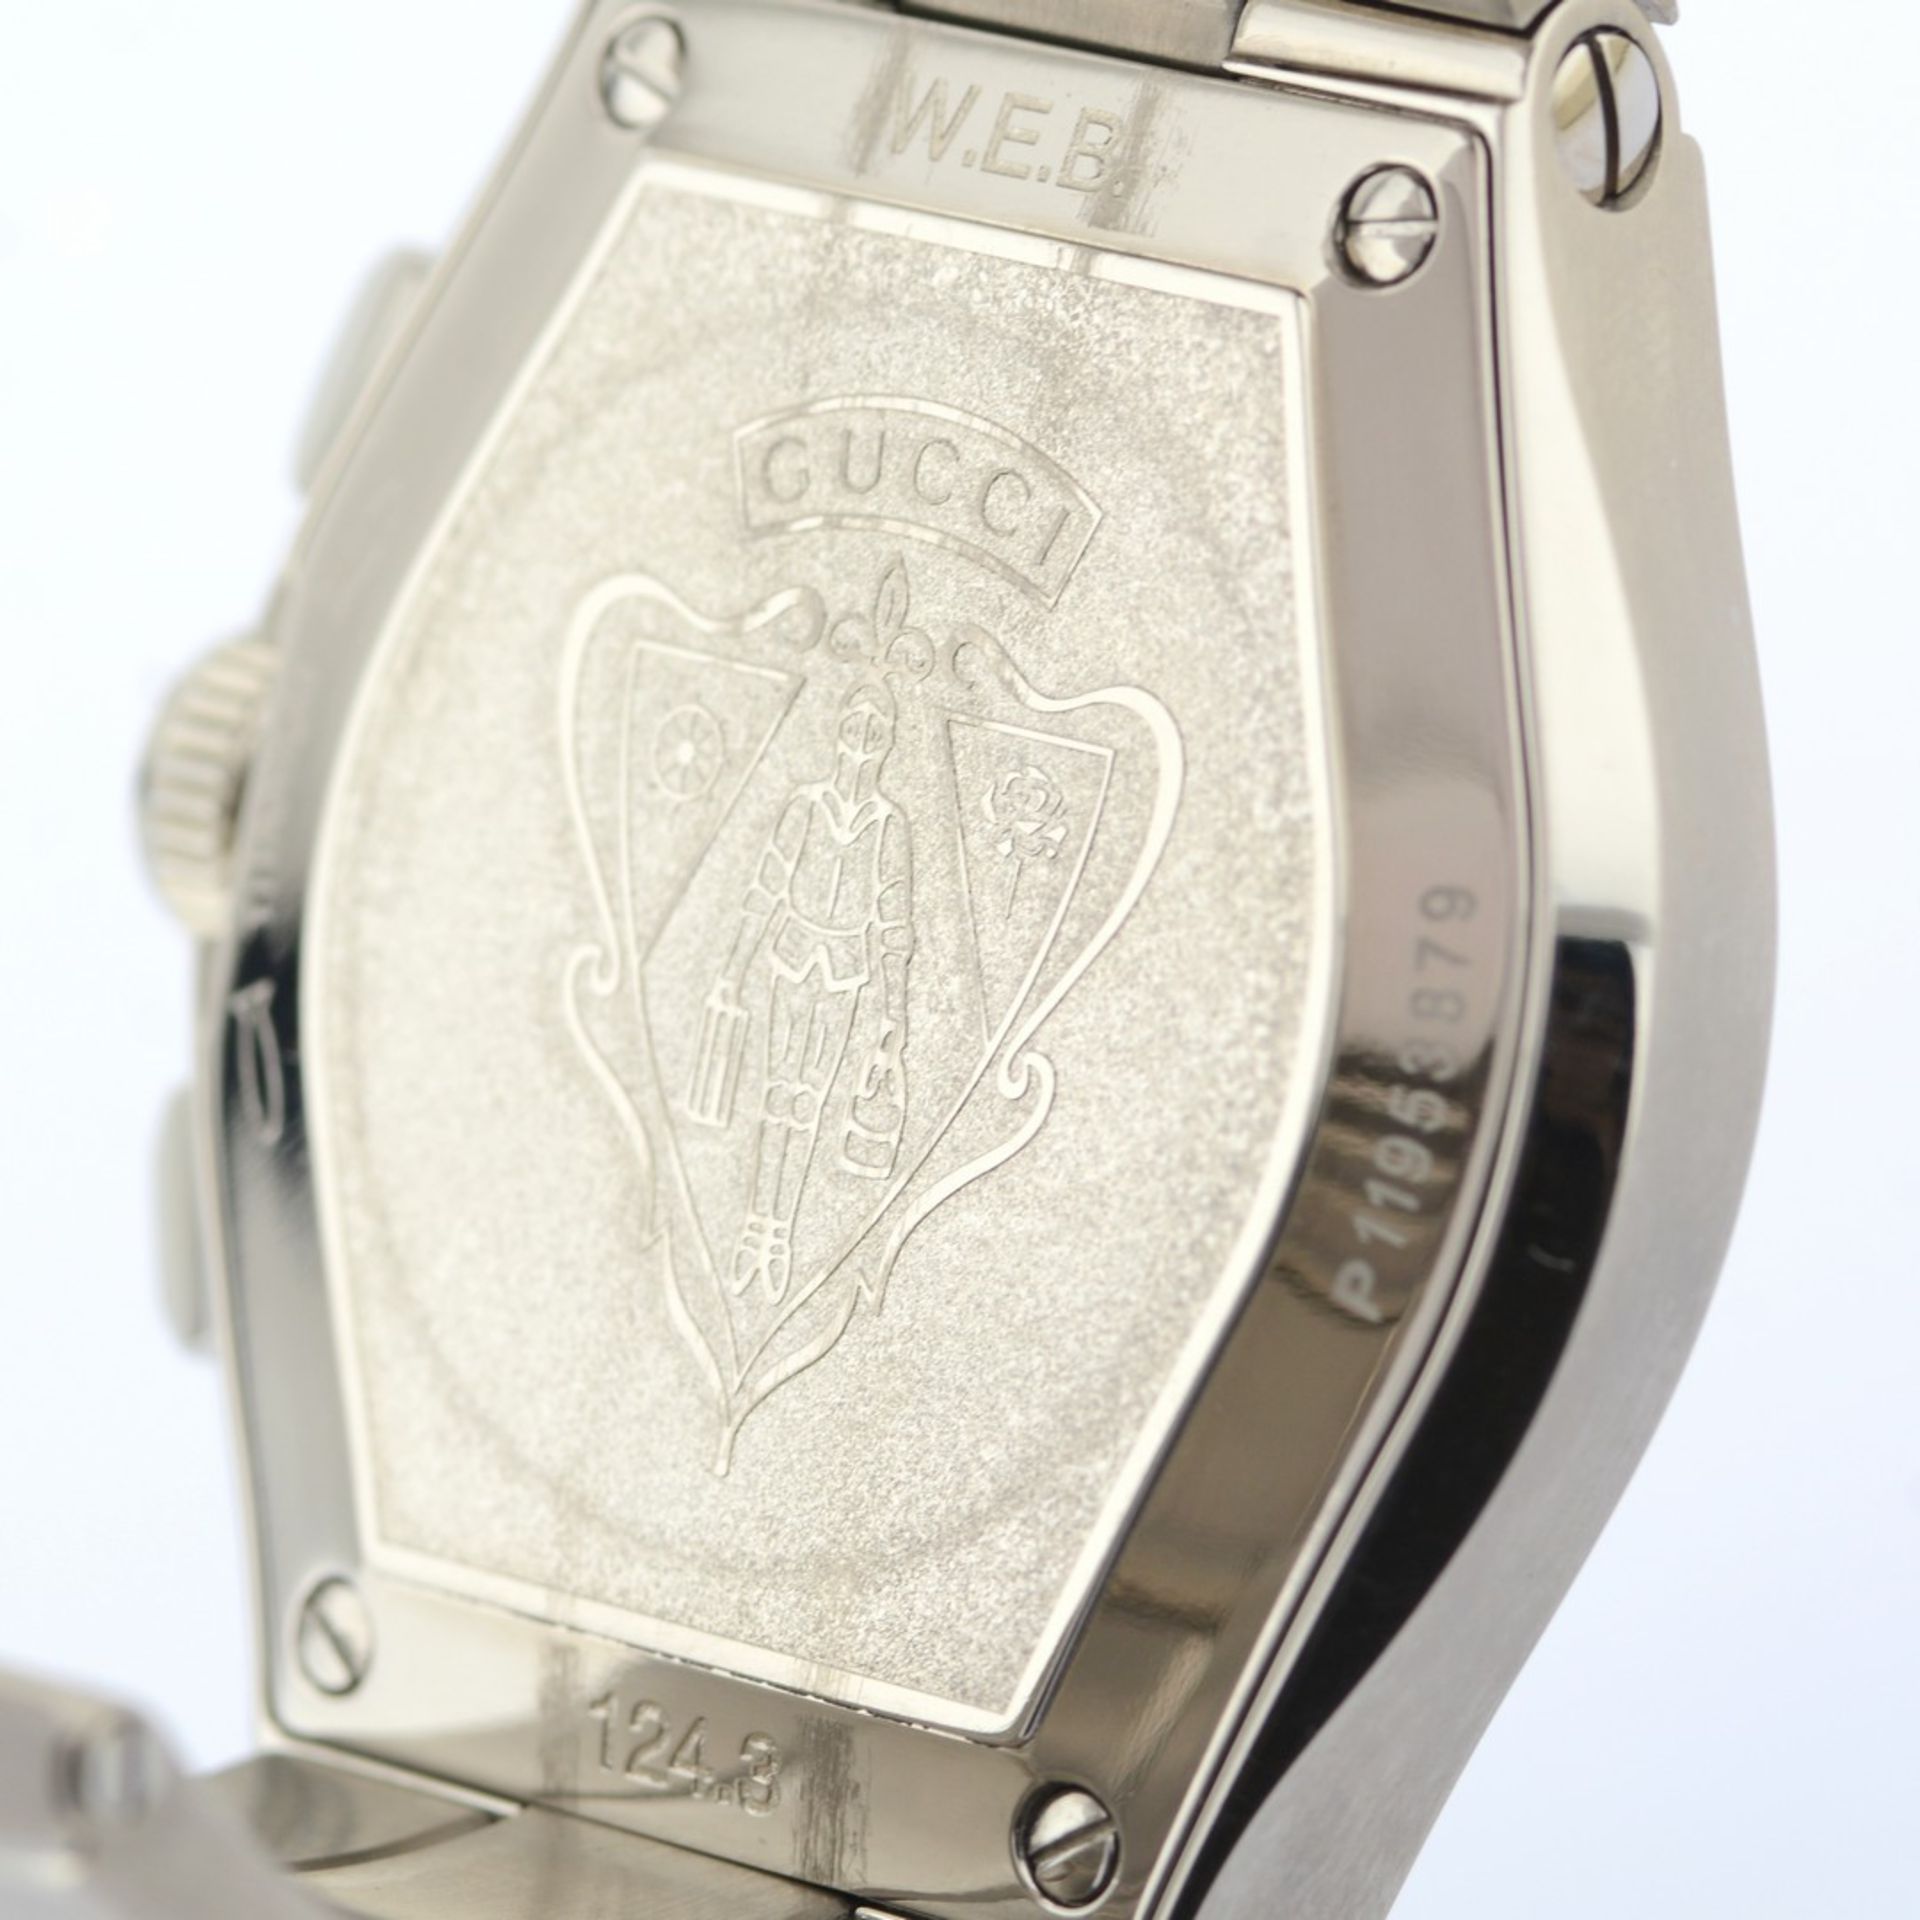 Gucci / Pantheon Automatic Chronograph - Gentlemen's Titanium Wristwatch - Image 11 of 12